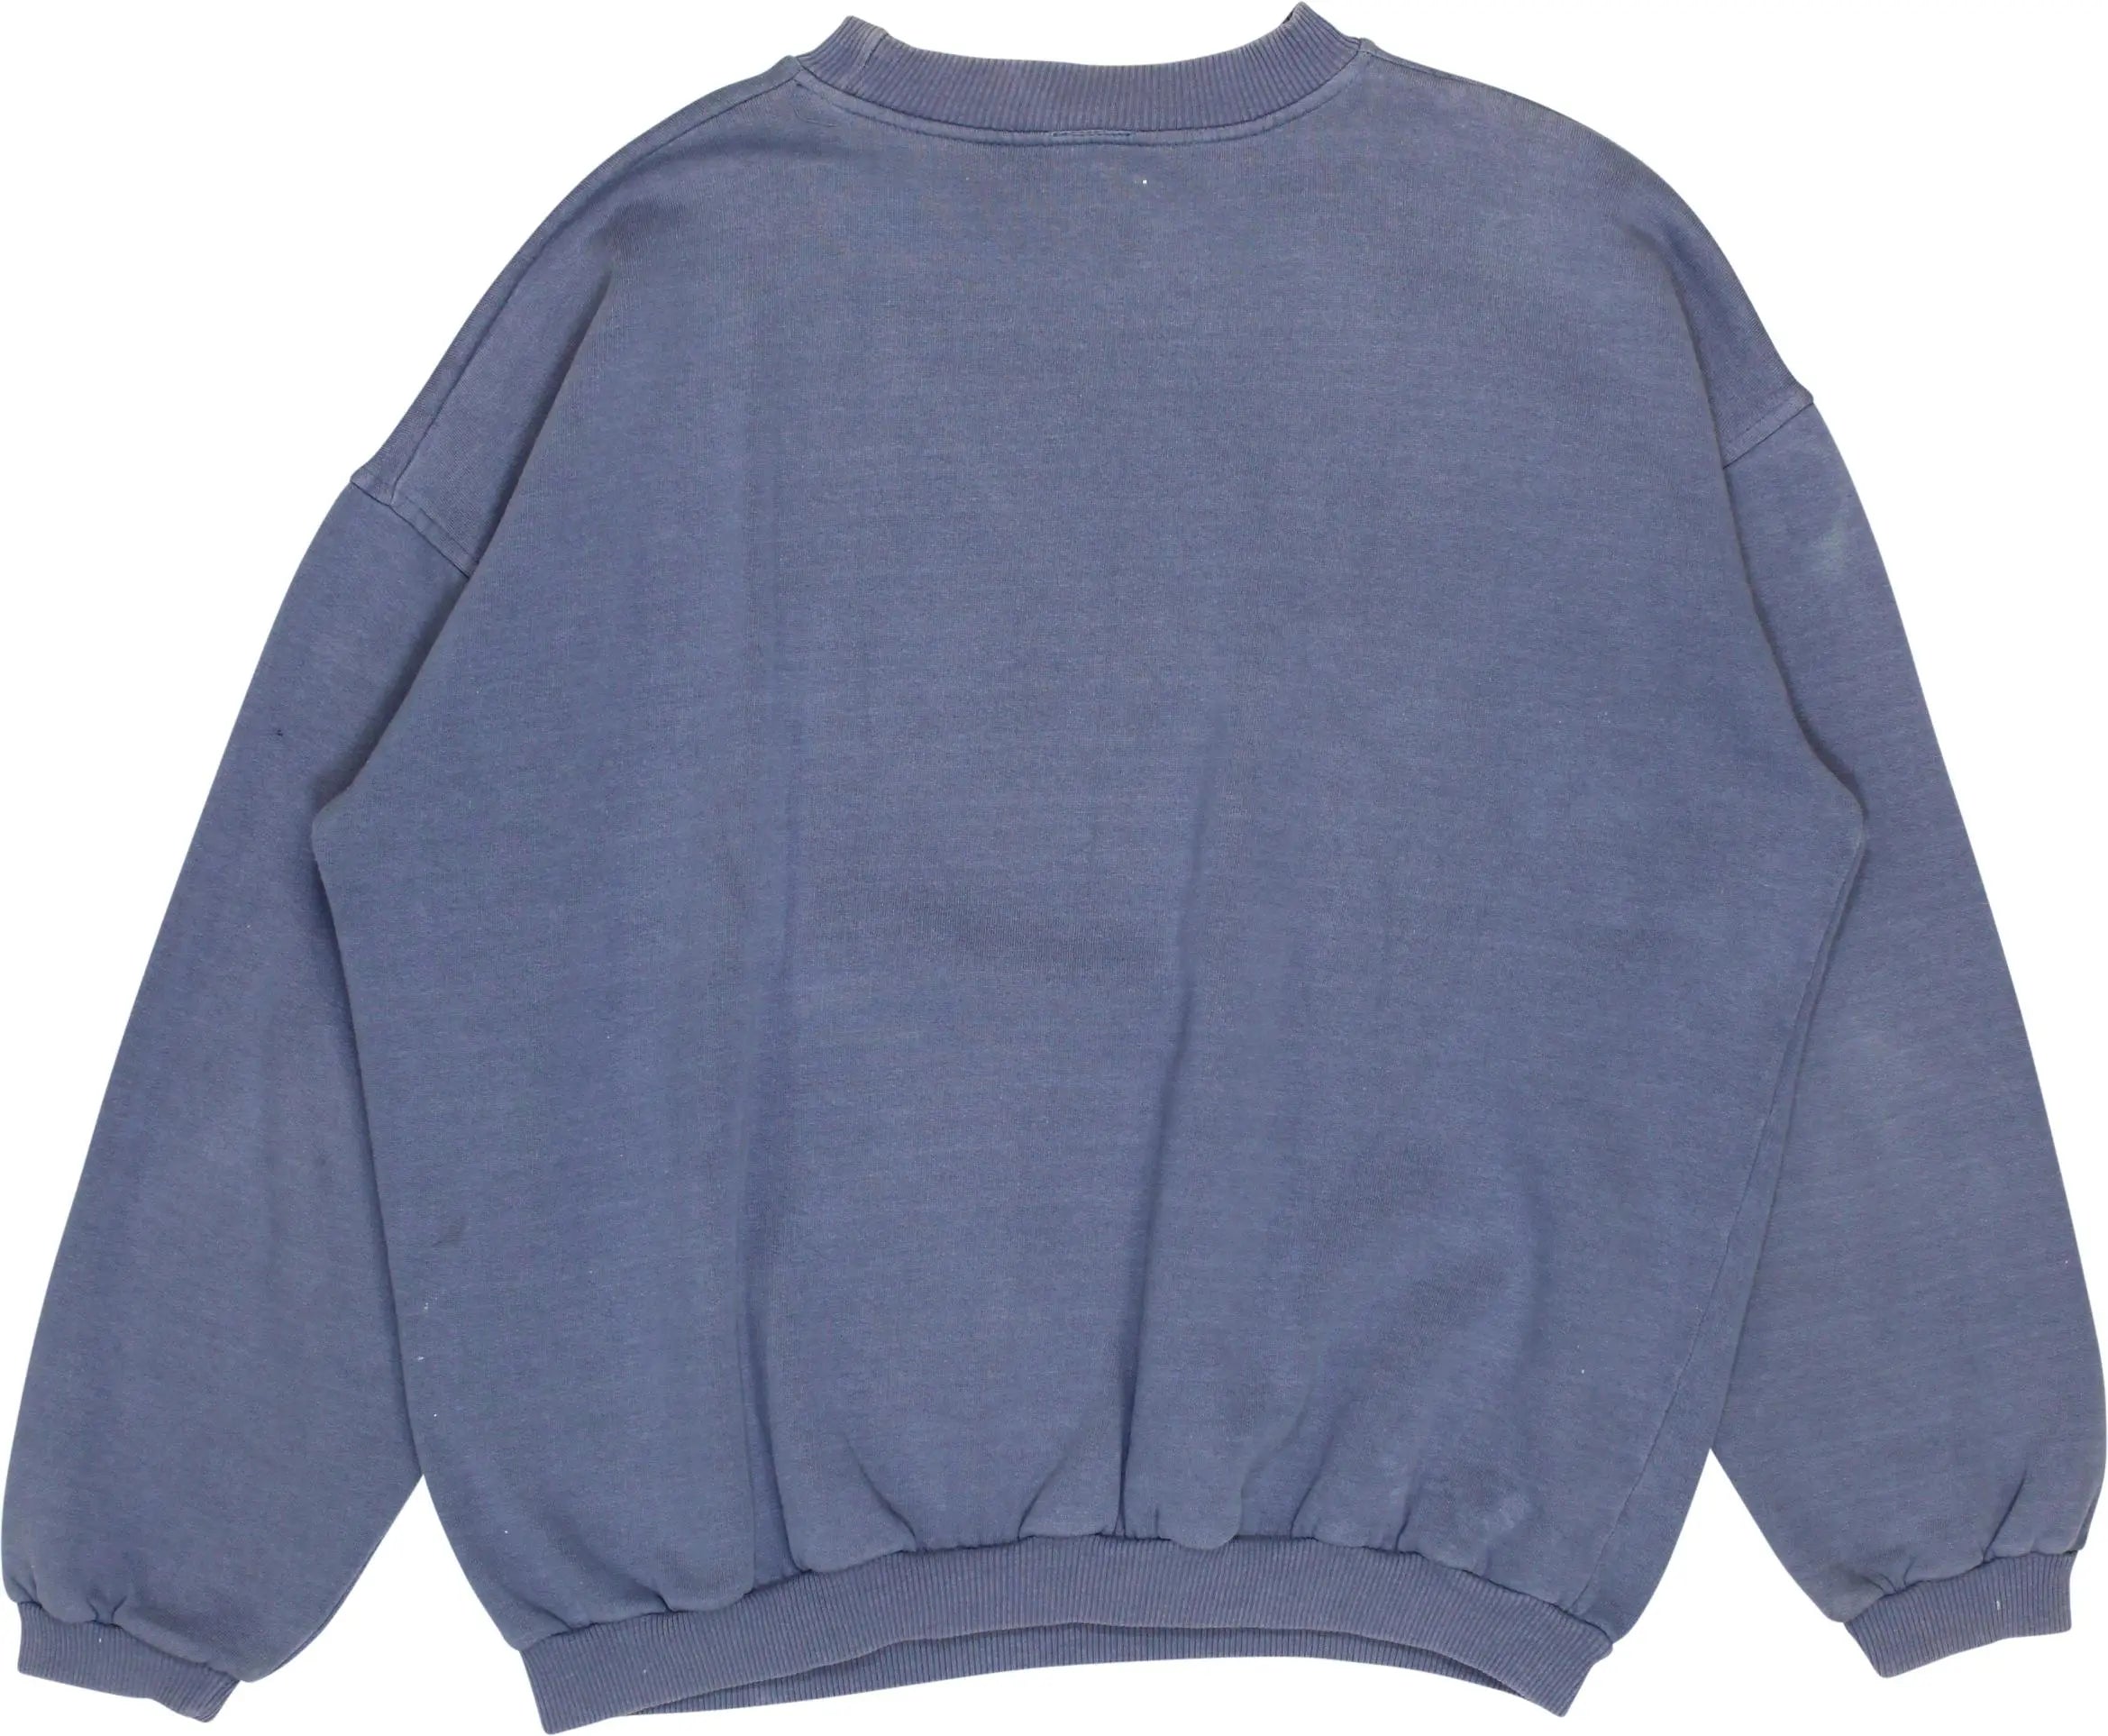 Kelme - Blue Sweatshirt by Kelme- ThriftTale.com - Vintage and second handclothing